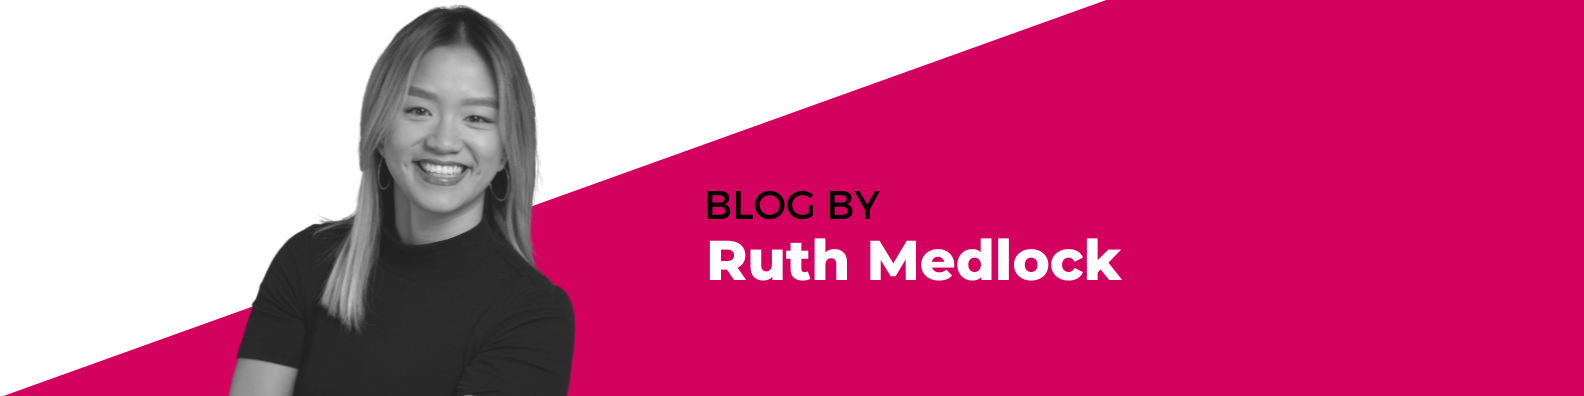 Author Ruth Medlock Employment